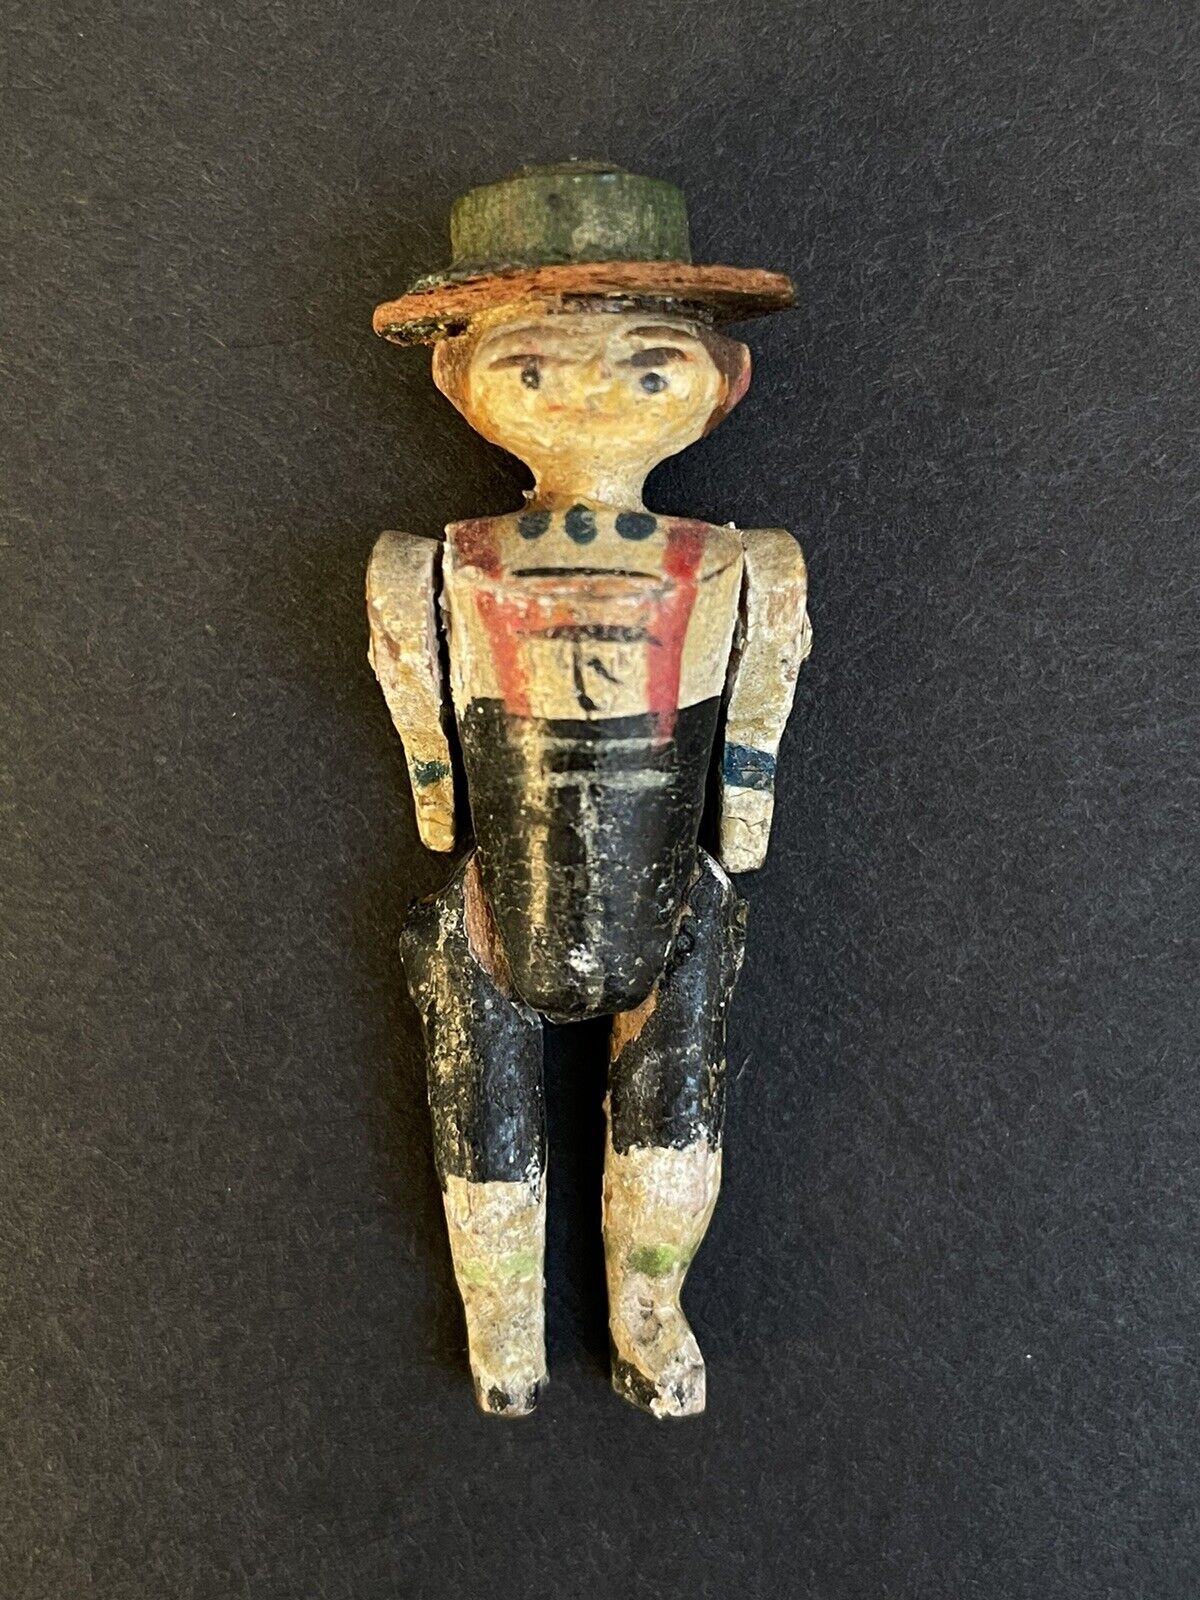 Antique German Grodnertal Miniature Wood Carved Peg Jointed Doll